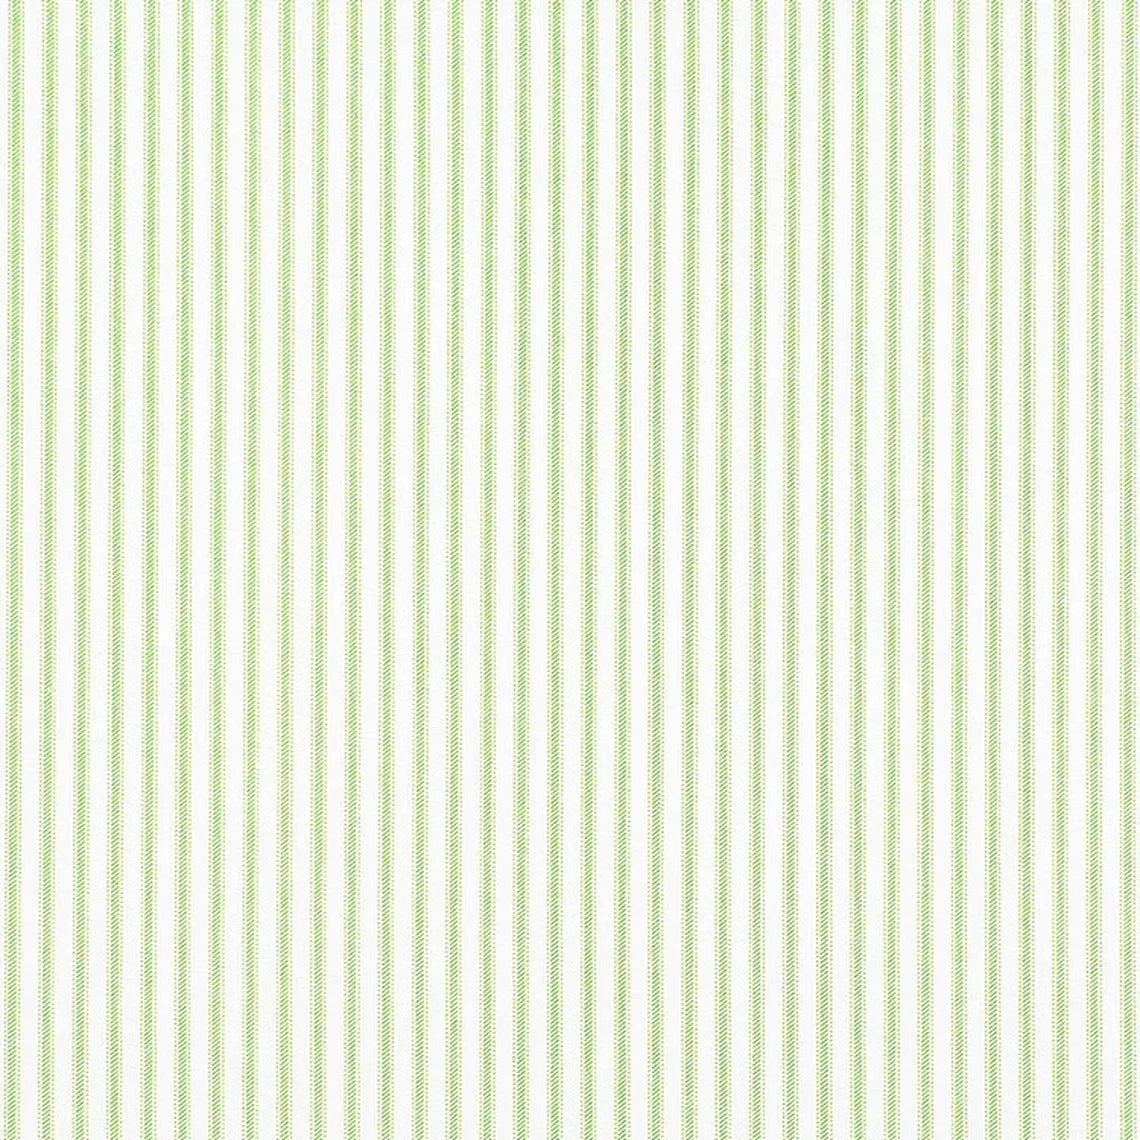 scallop valance in classic kiwi green ticking stripe on white